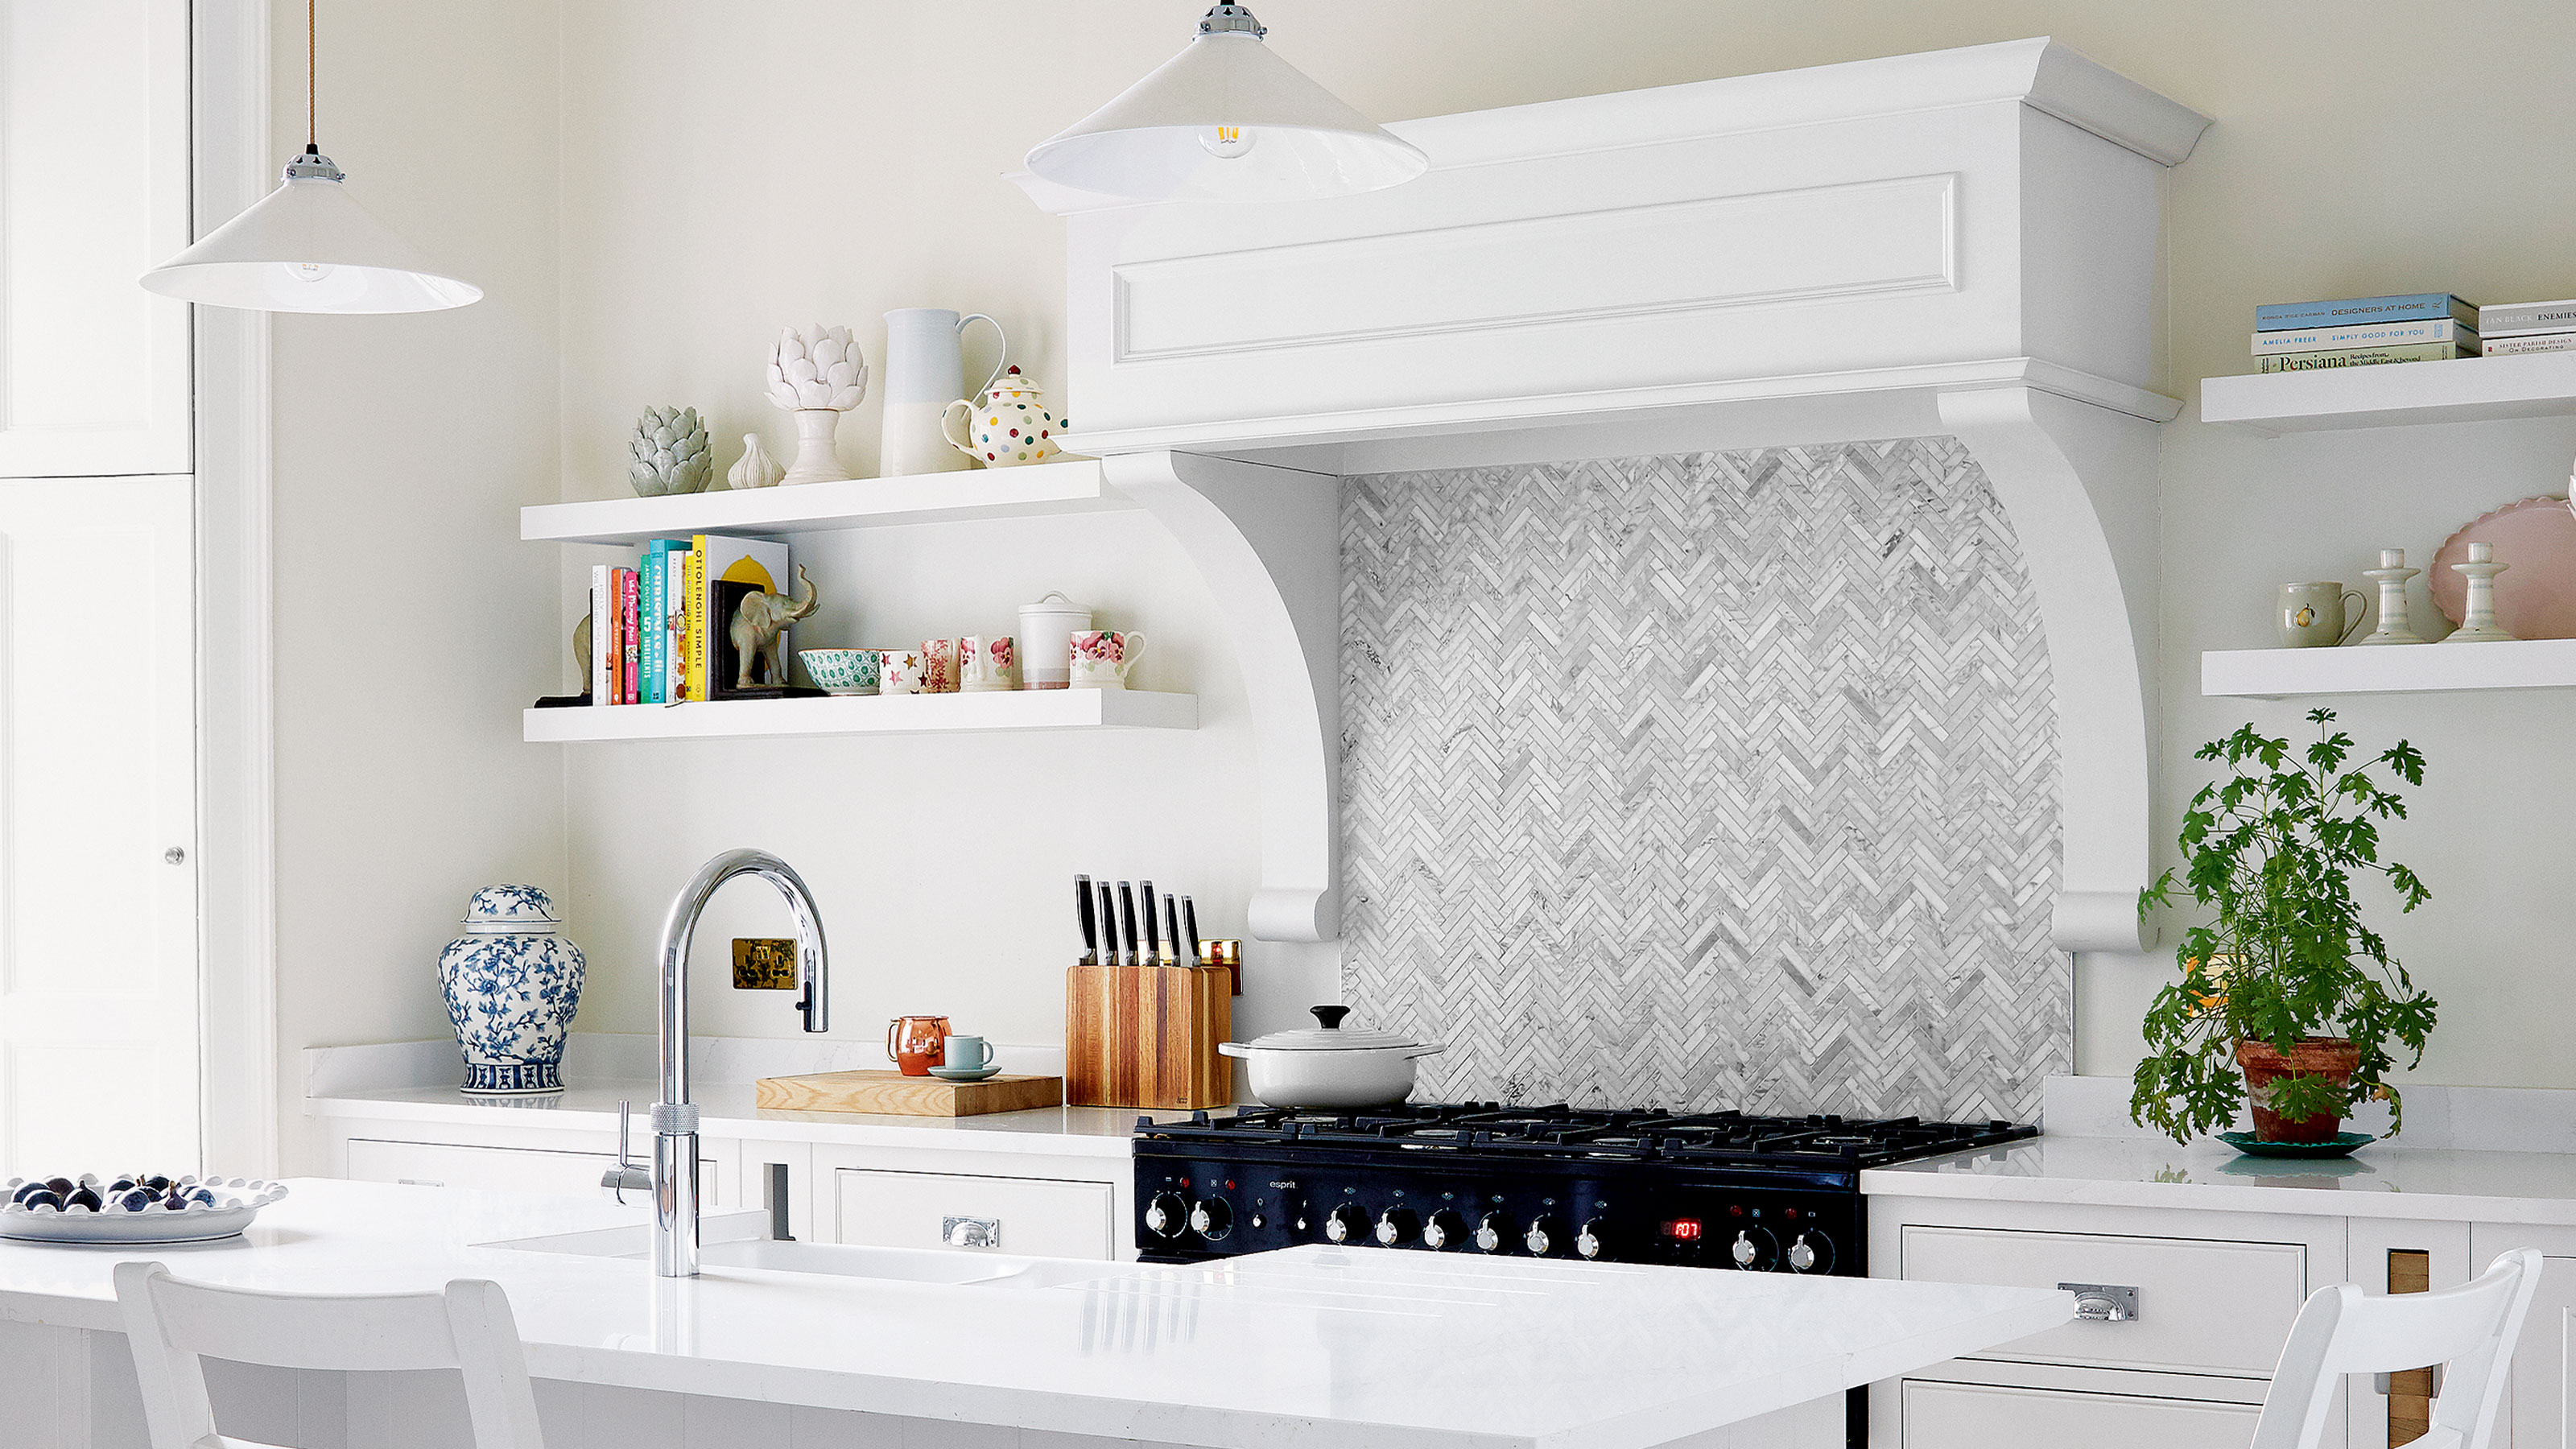 She's Crafty: Kitchen Countertop Riser